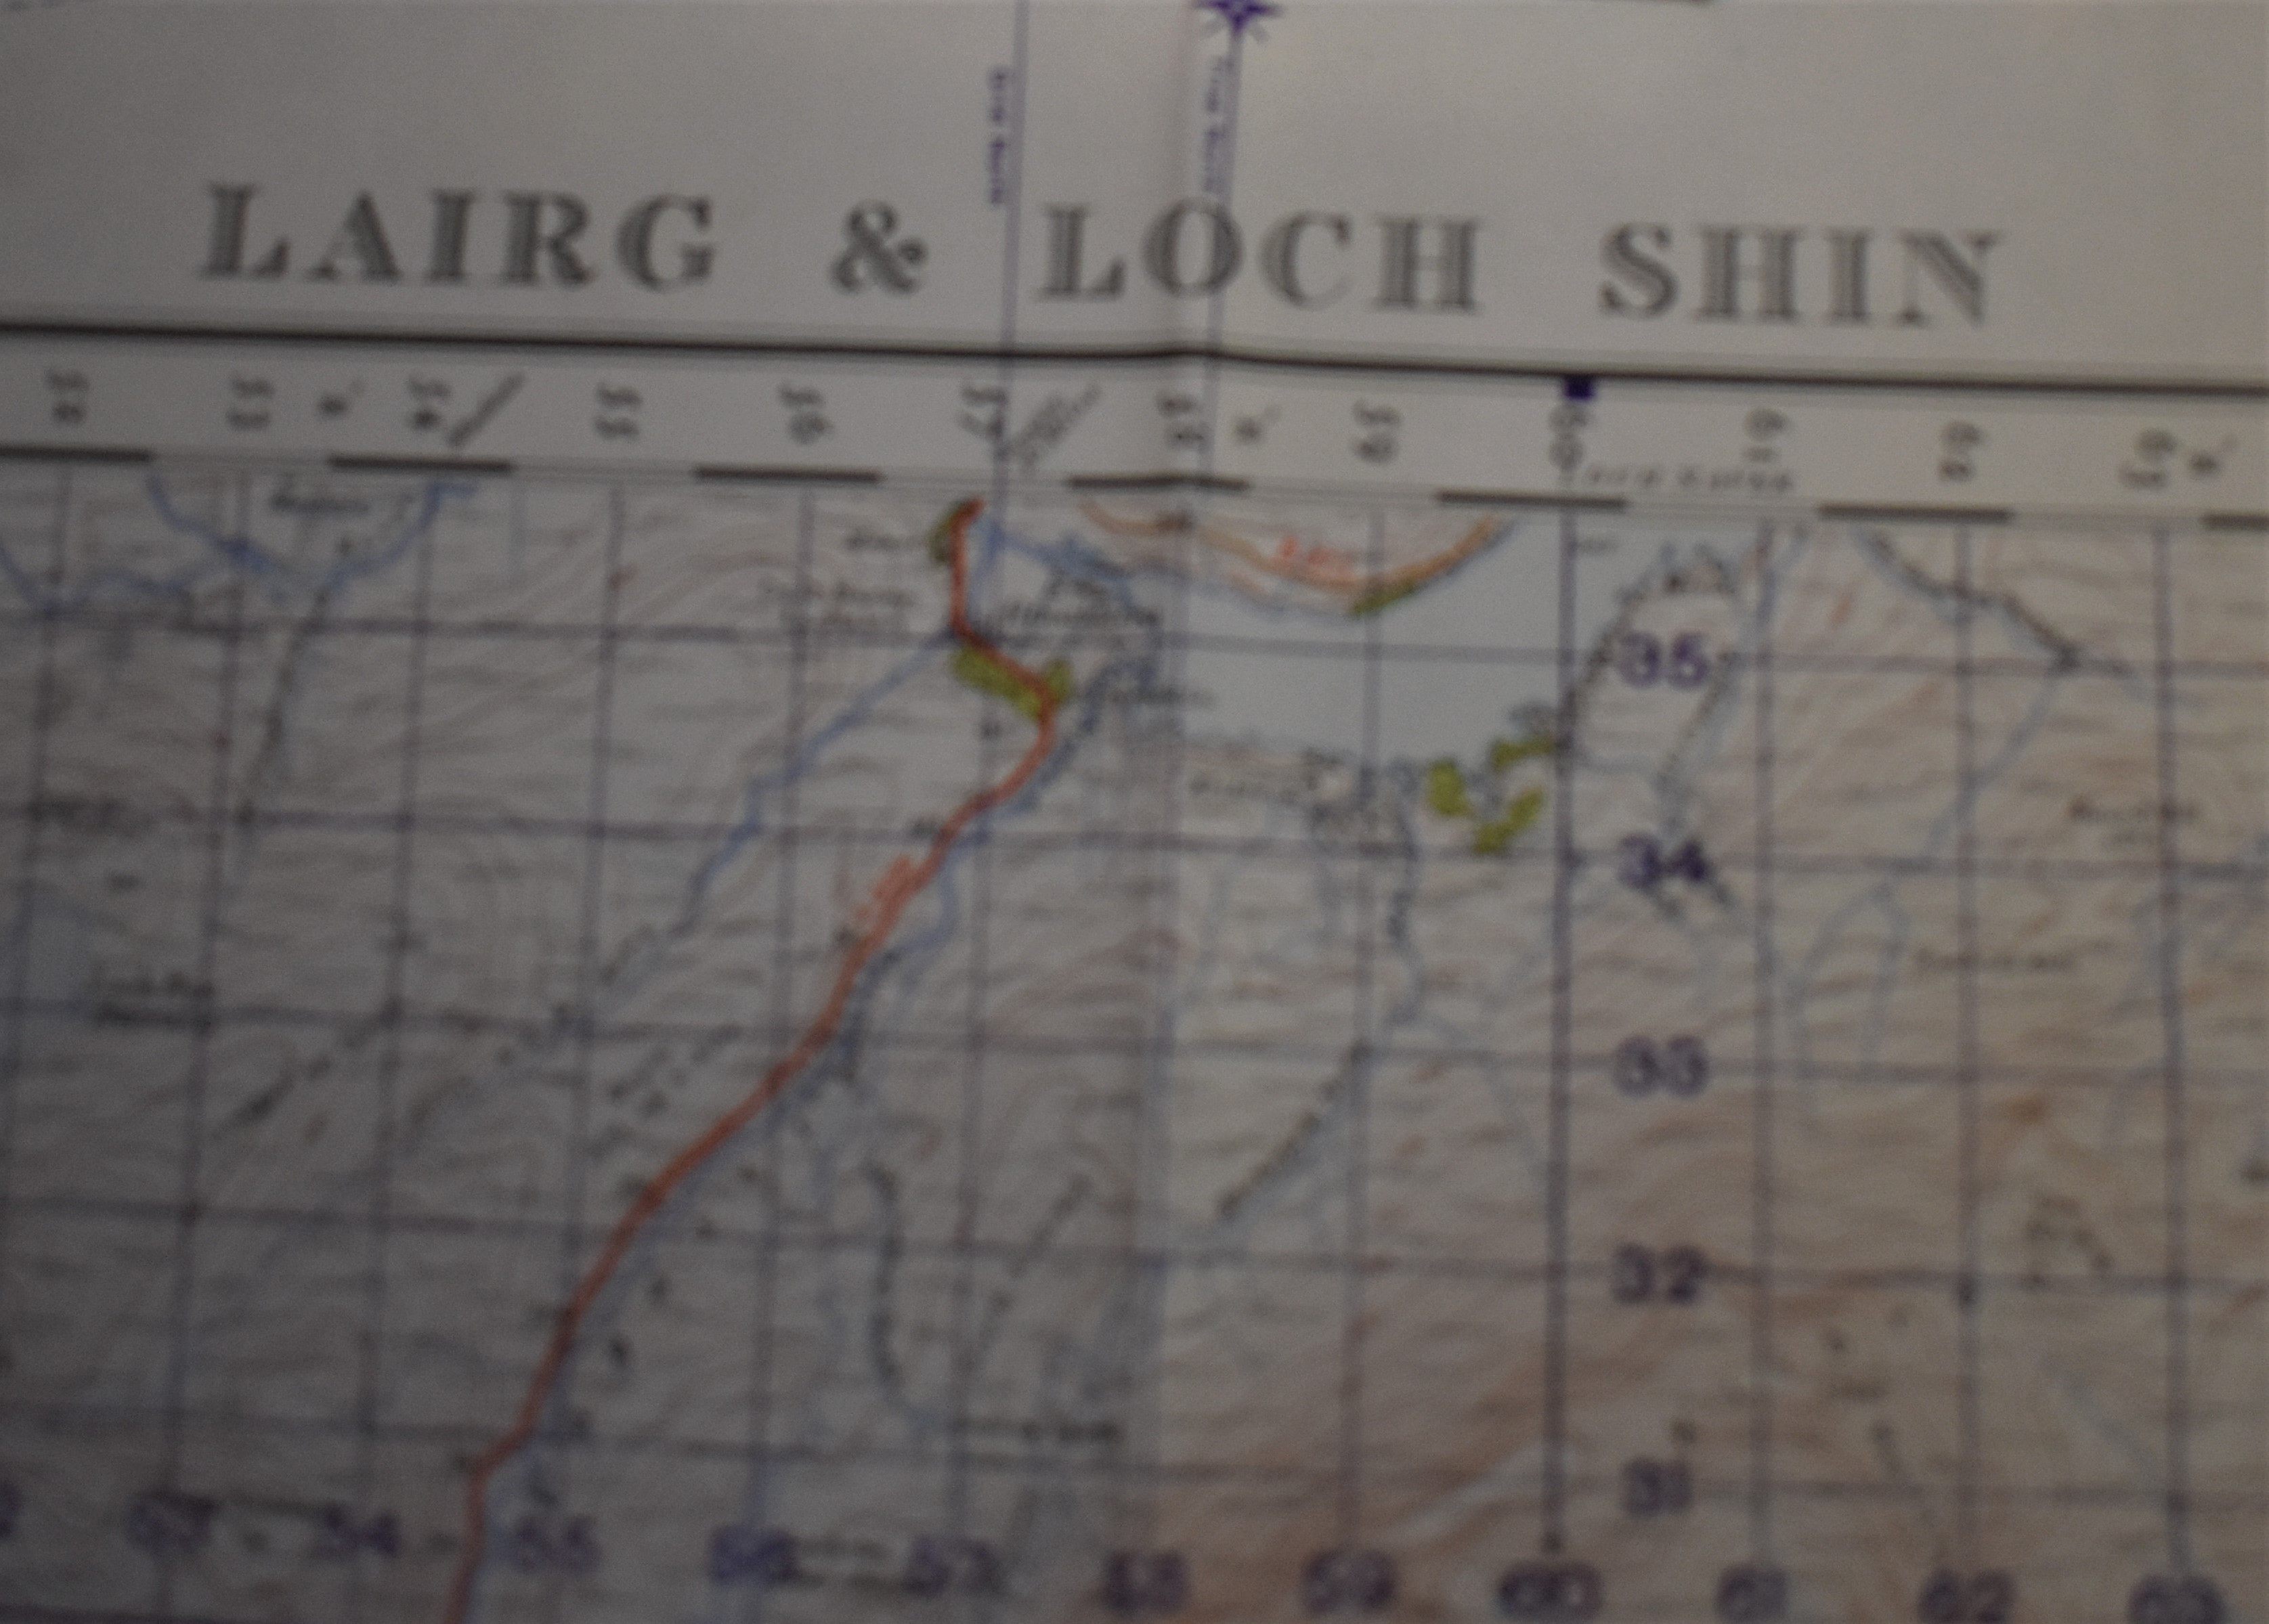 Scotland 'Laig Loch Shin' War Office Edition-Ordnance survey map - sheet 16- published 1950-mint - Image 2 of 2